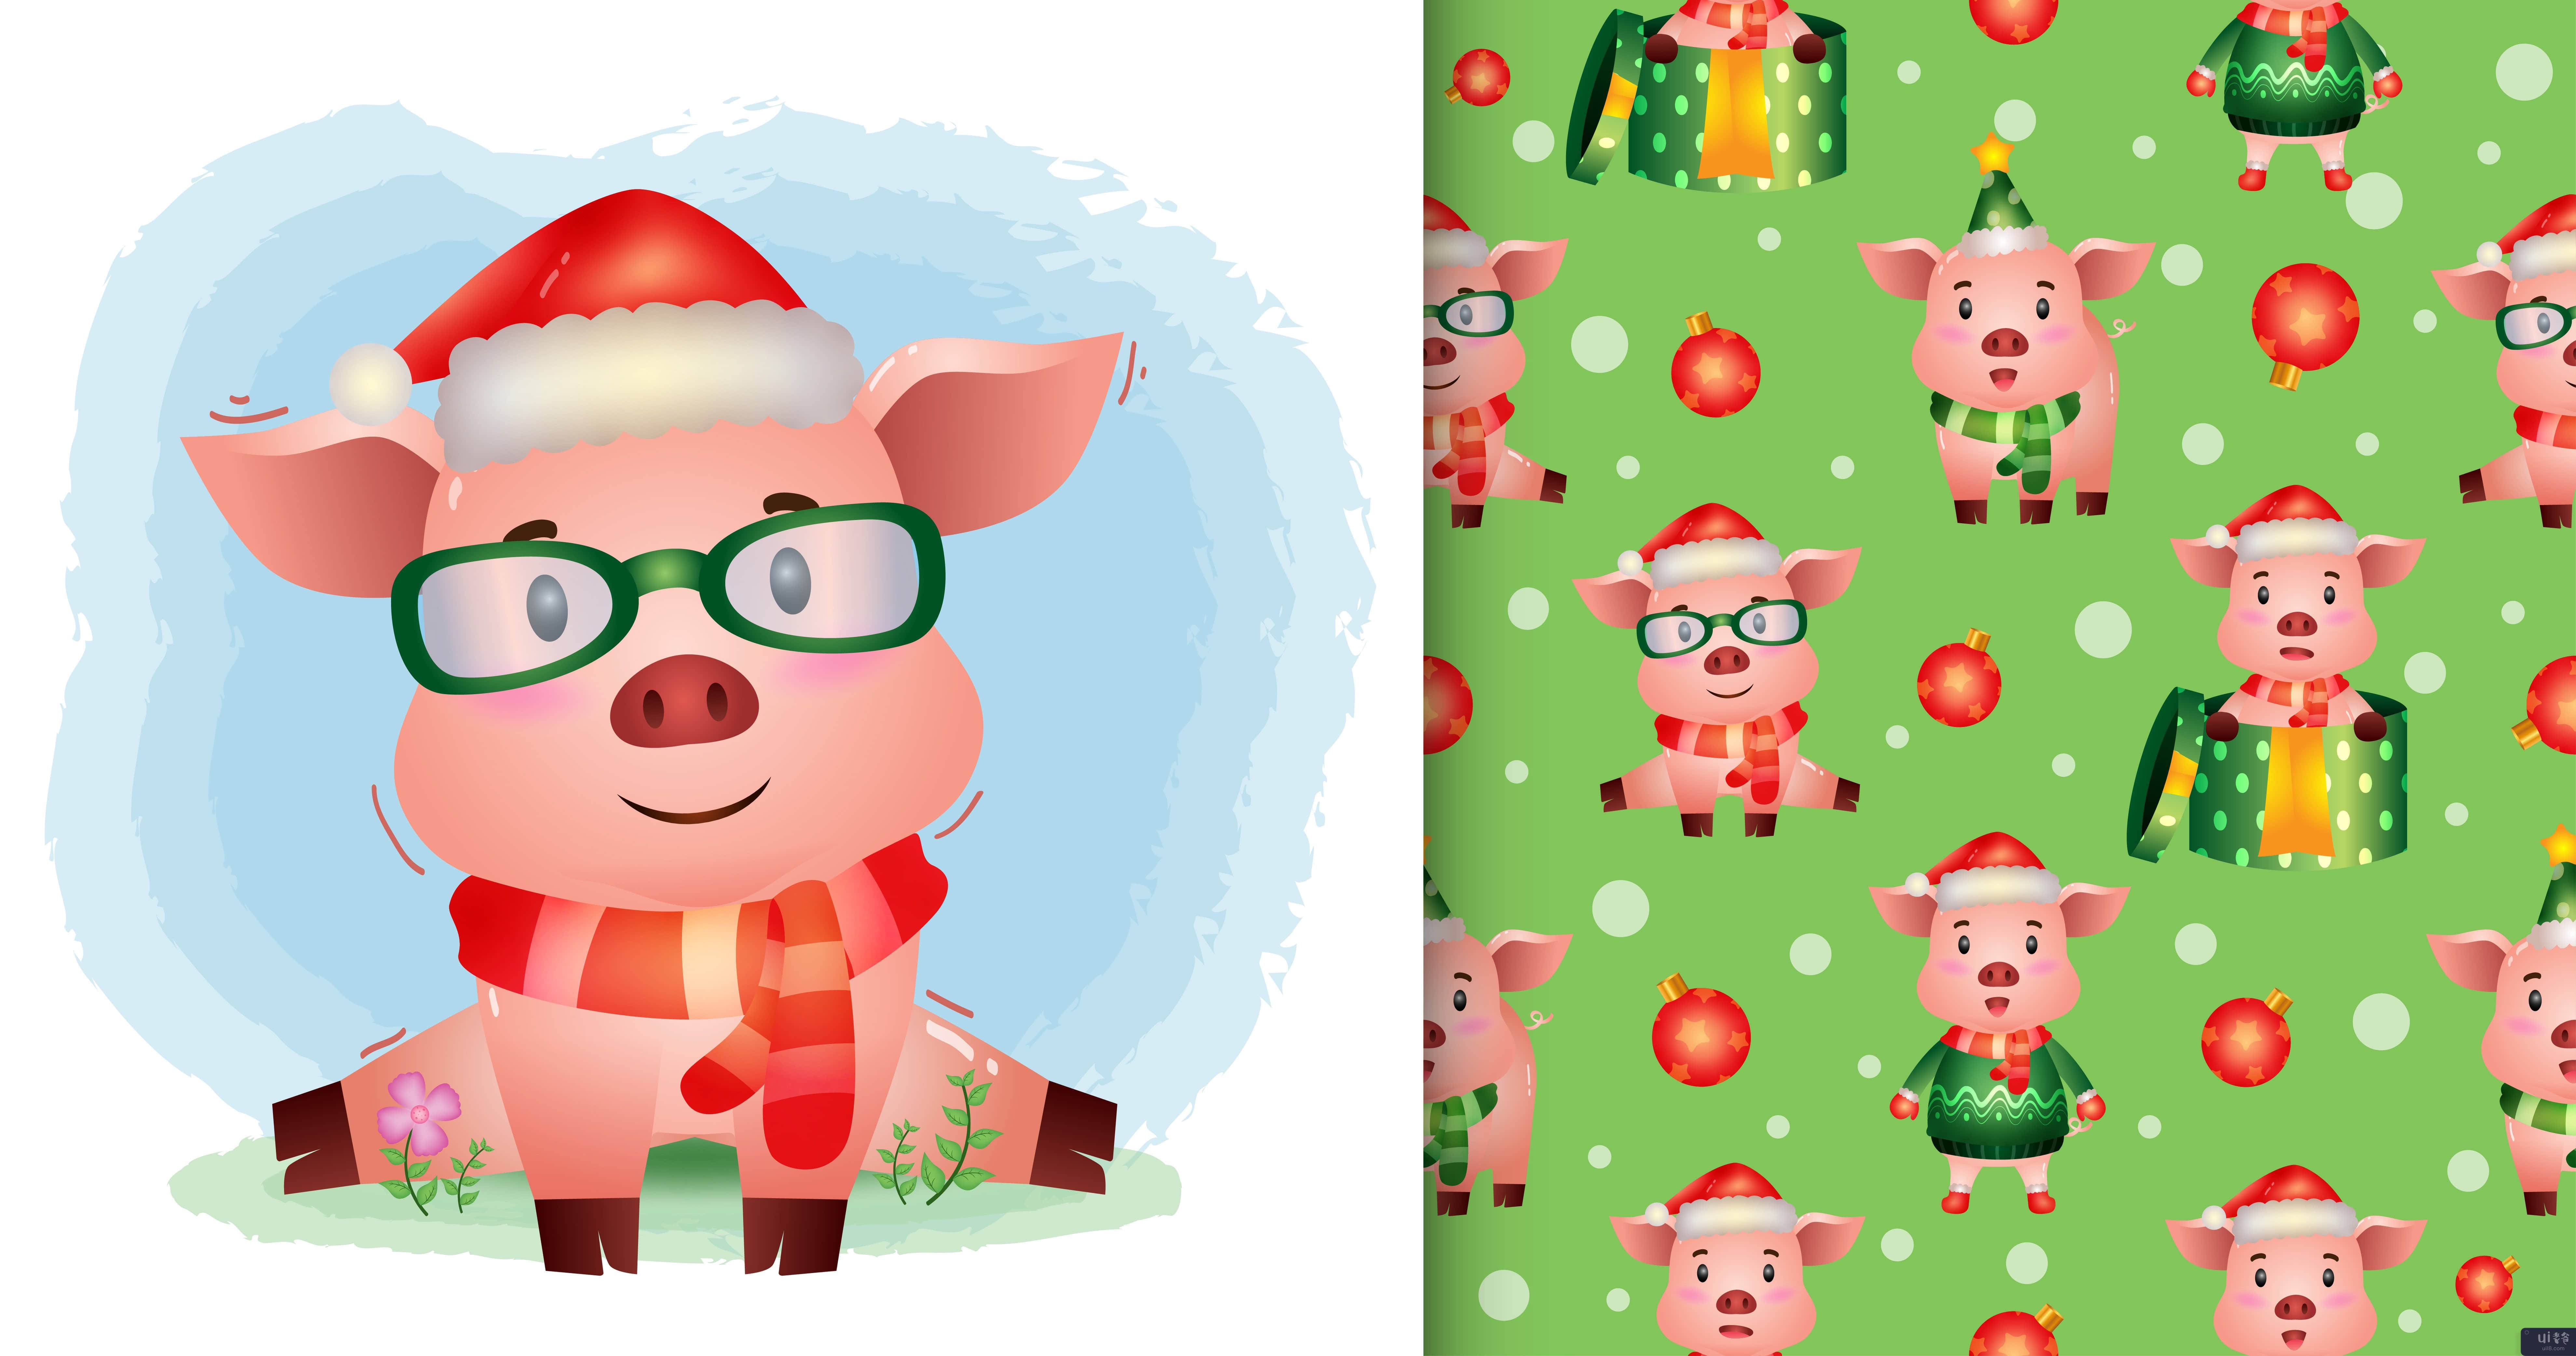 一个可爱的猪圣诞人物。无缝图案和插图设计(a cute pig christmas characters. seamless pattern and illustration designs)插图2